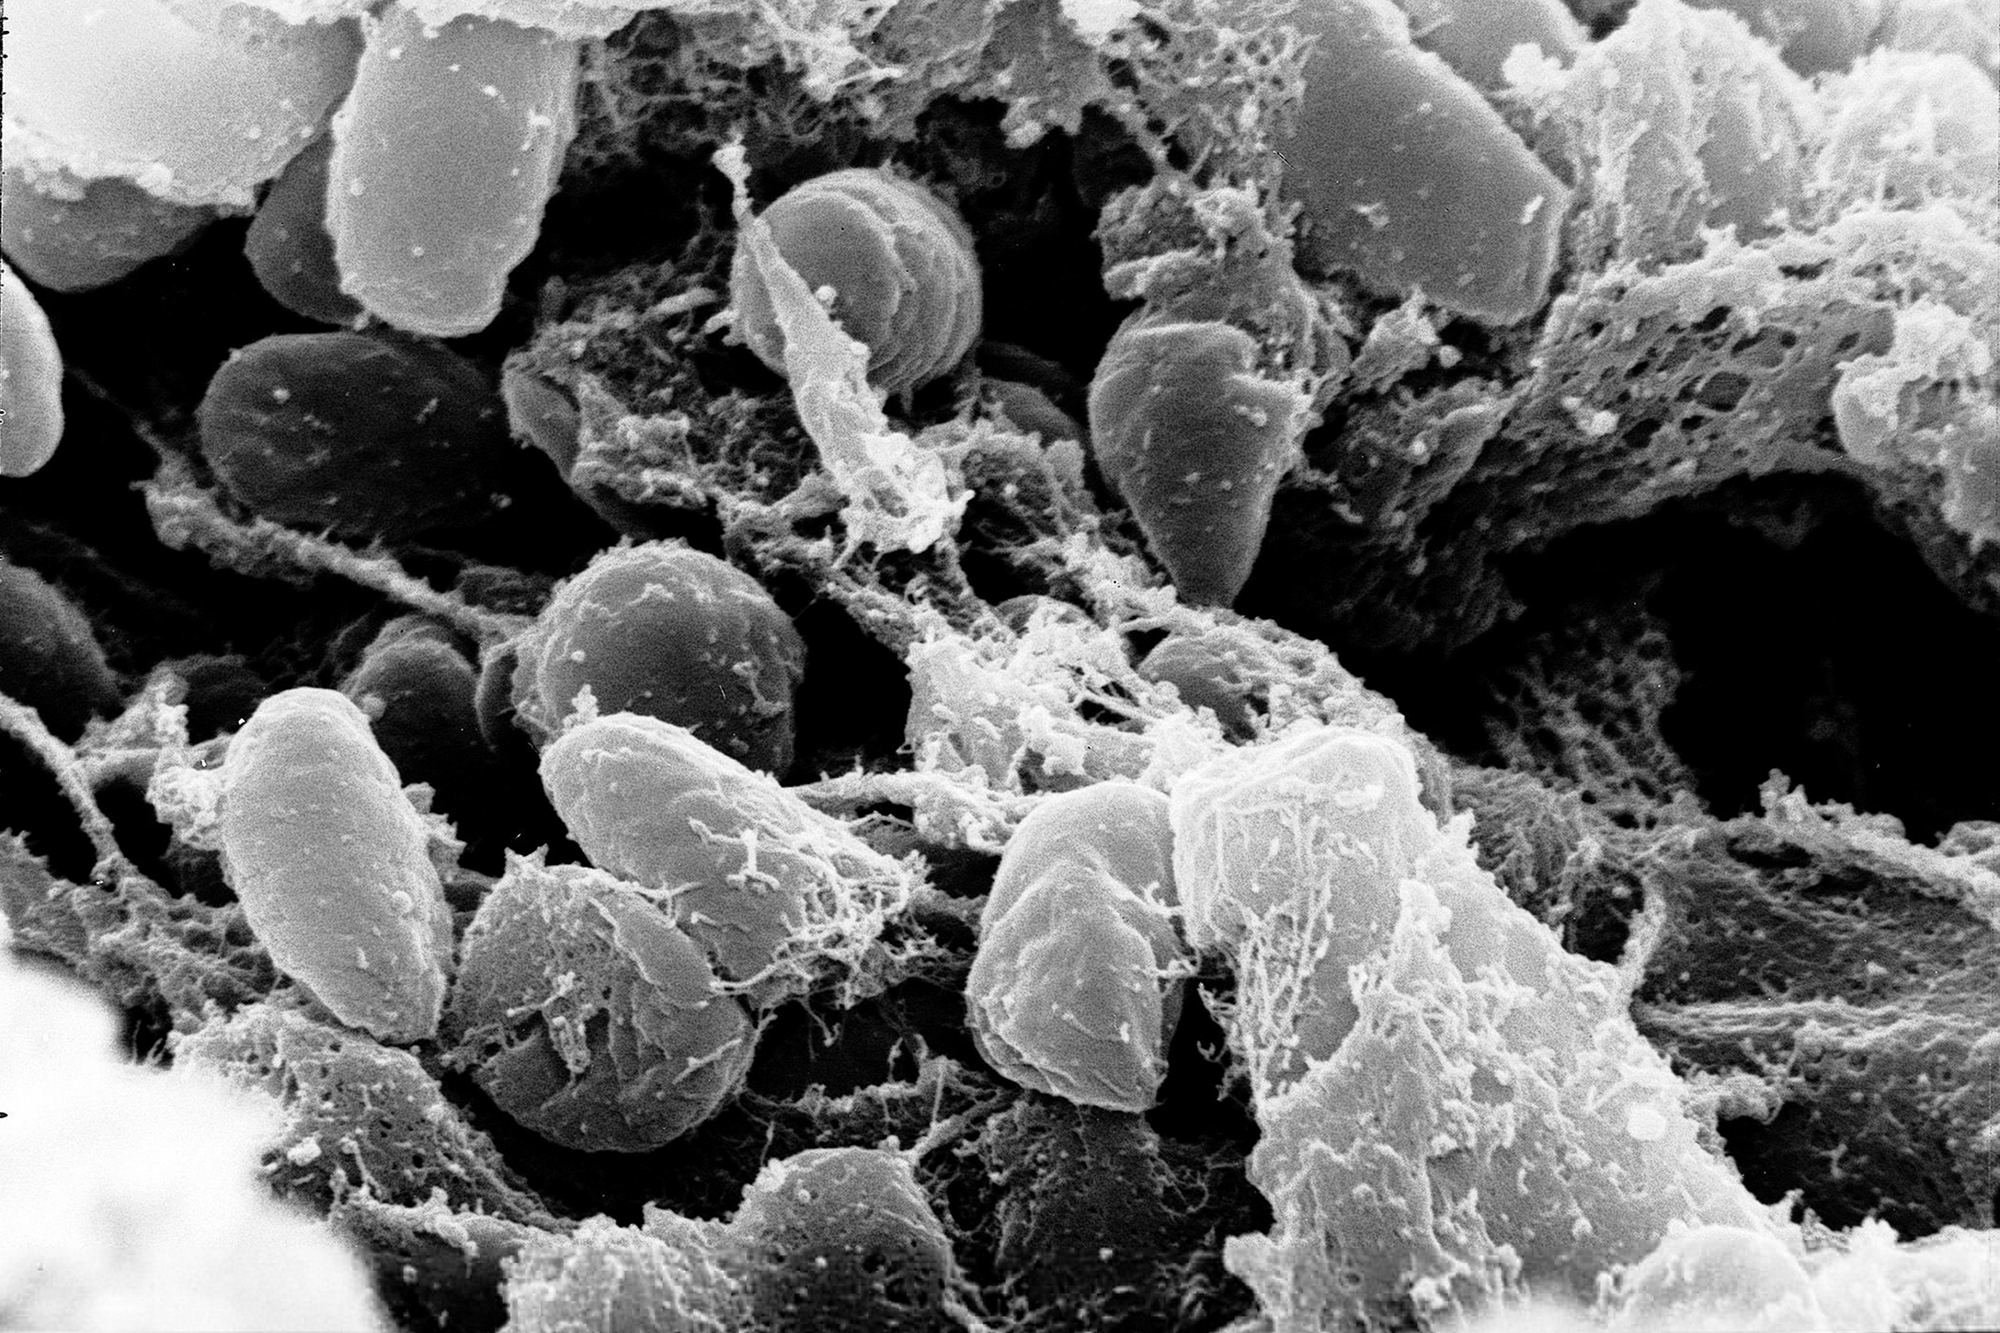 Mass of Yersinia pestis bacteria. (Media for Medical/UIG/Getty Images)